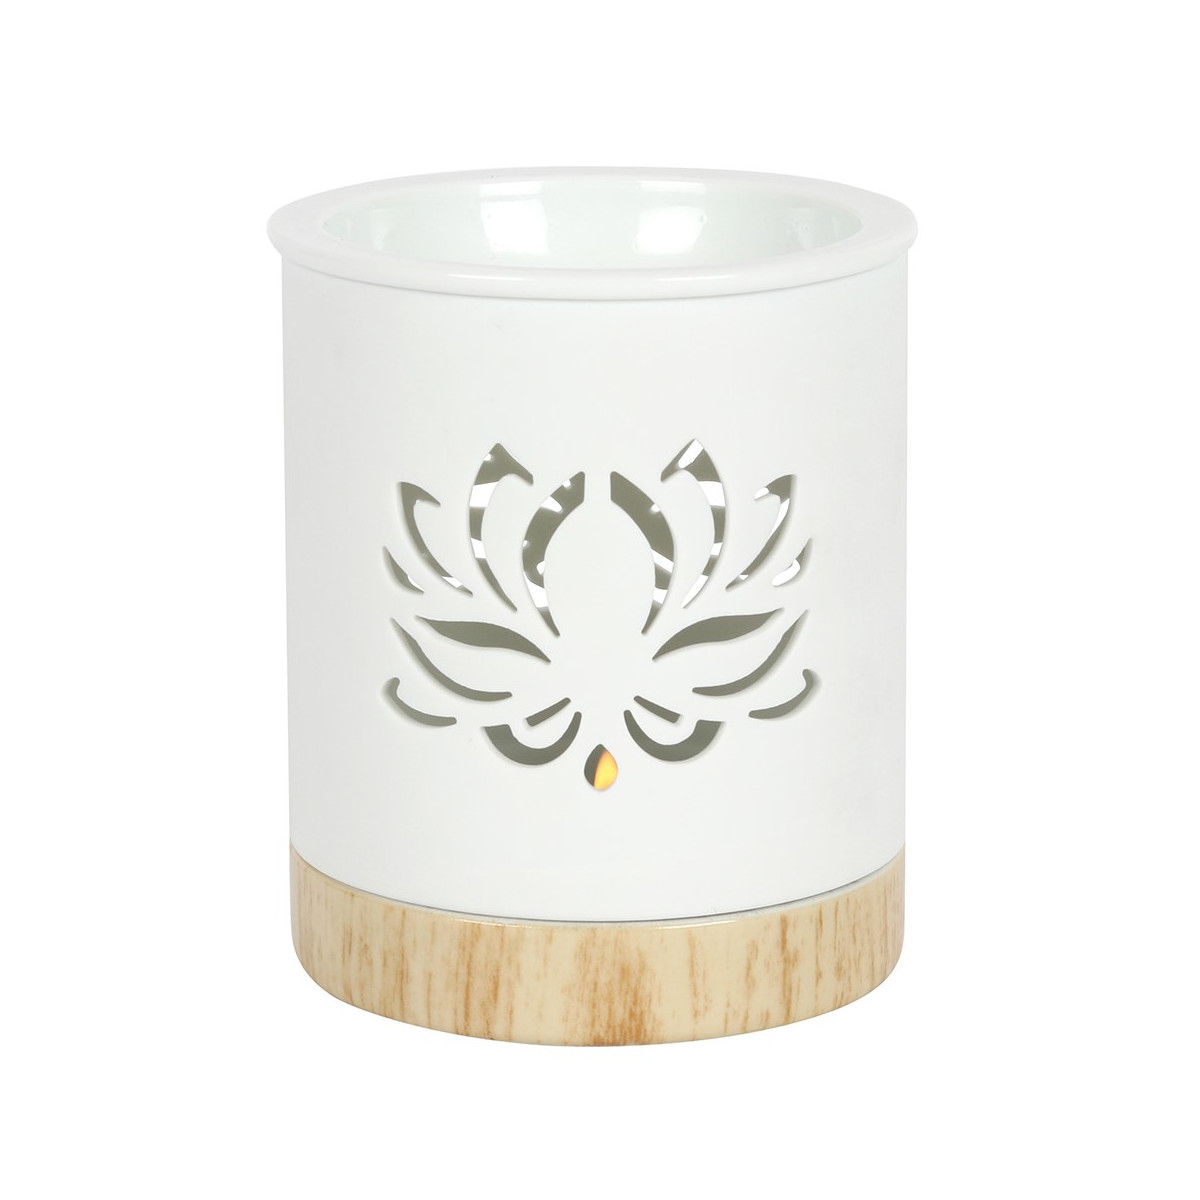 Matt-Weiße Keramik Duftlampe Weißer Lotus